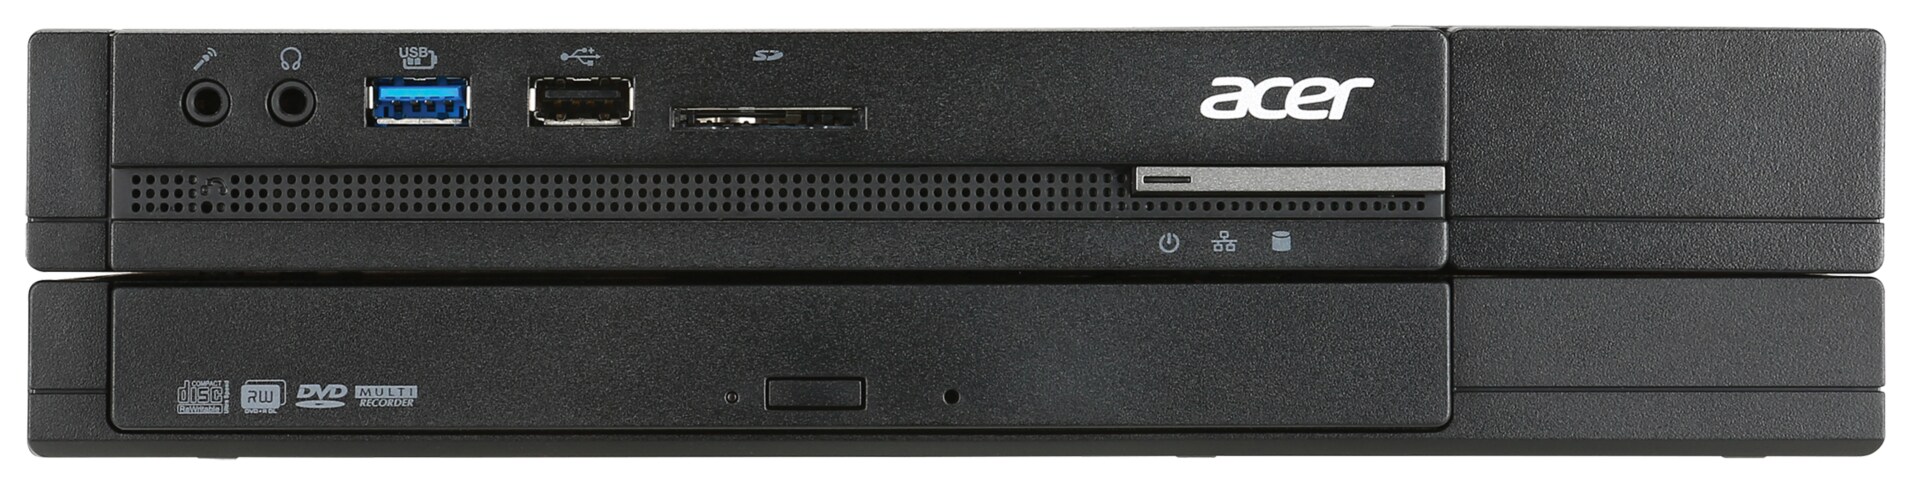 Acer Veriton N2510G_W1n3050 - tiny desktop - Celeron N3050 1.6 GHz - 4 GB - 500 GB